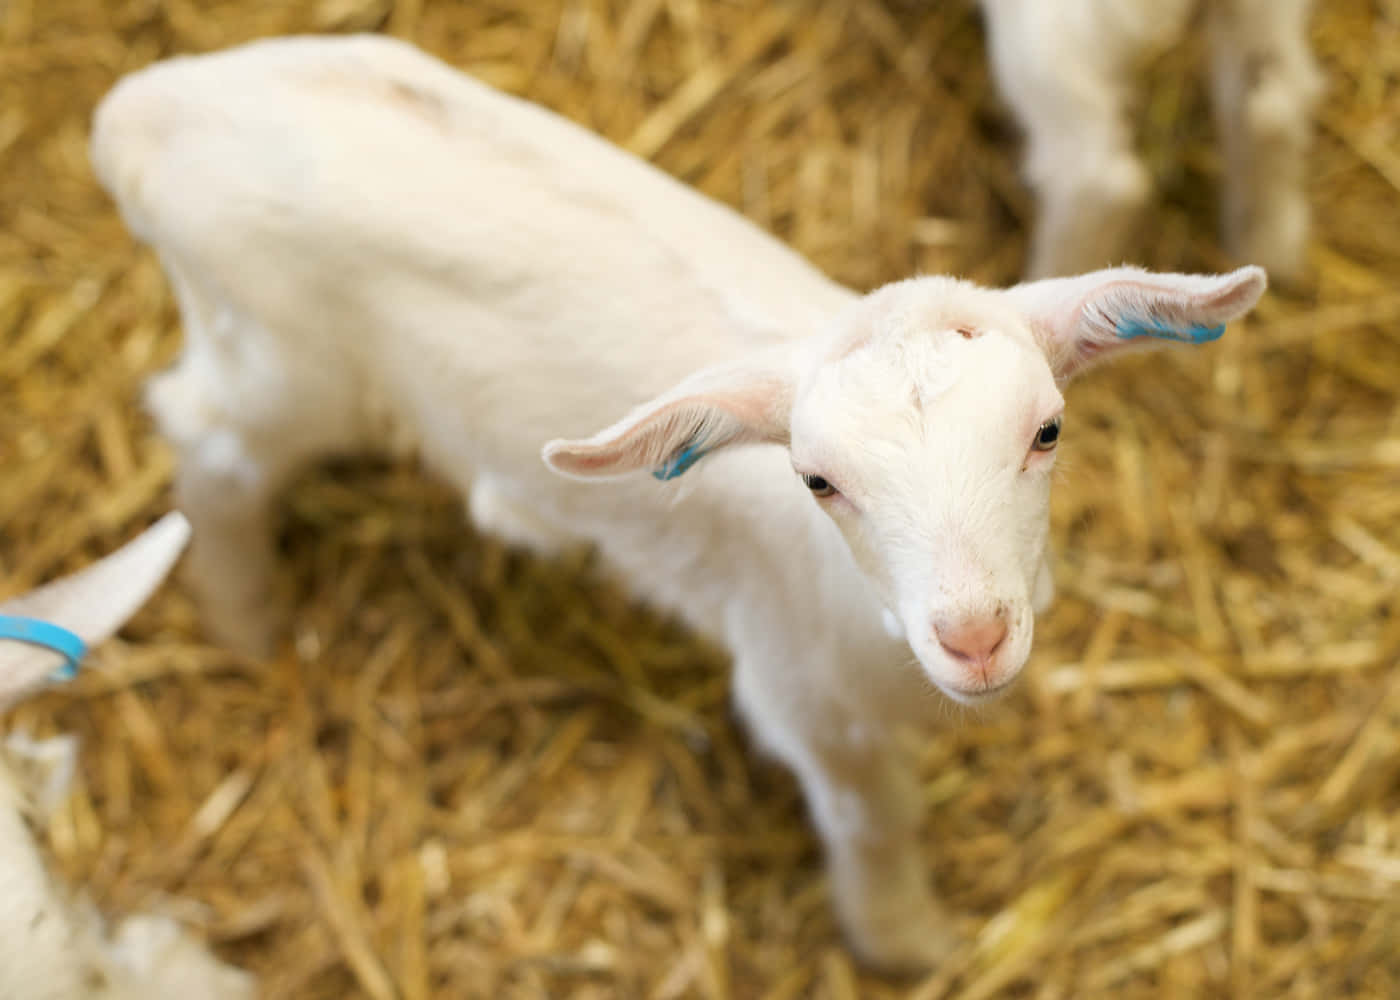 White Cute Goat In Barn Picture